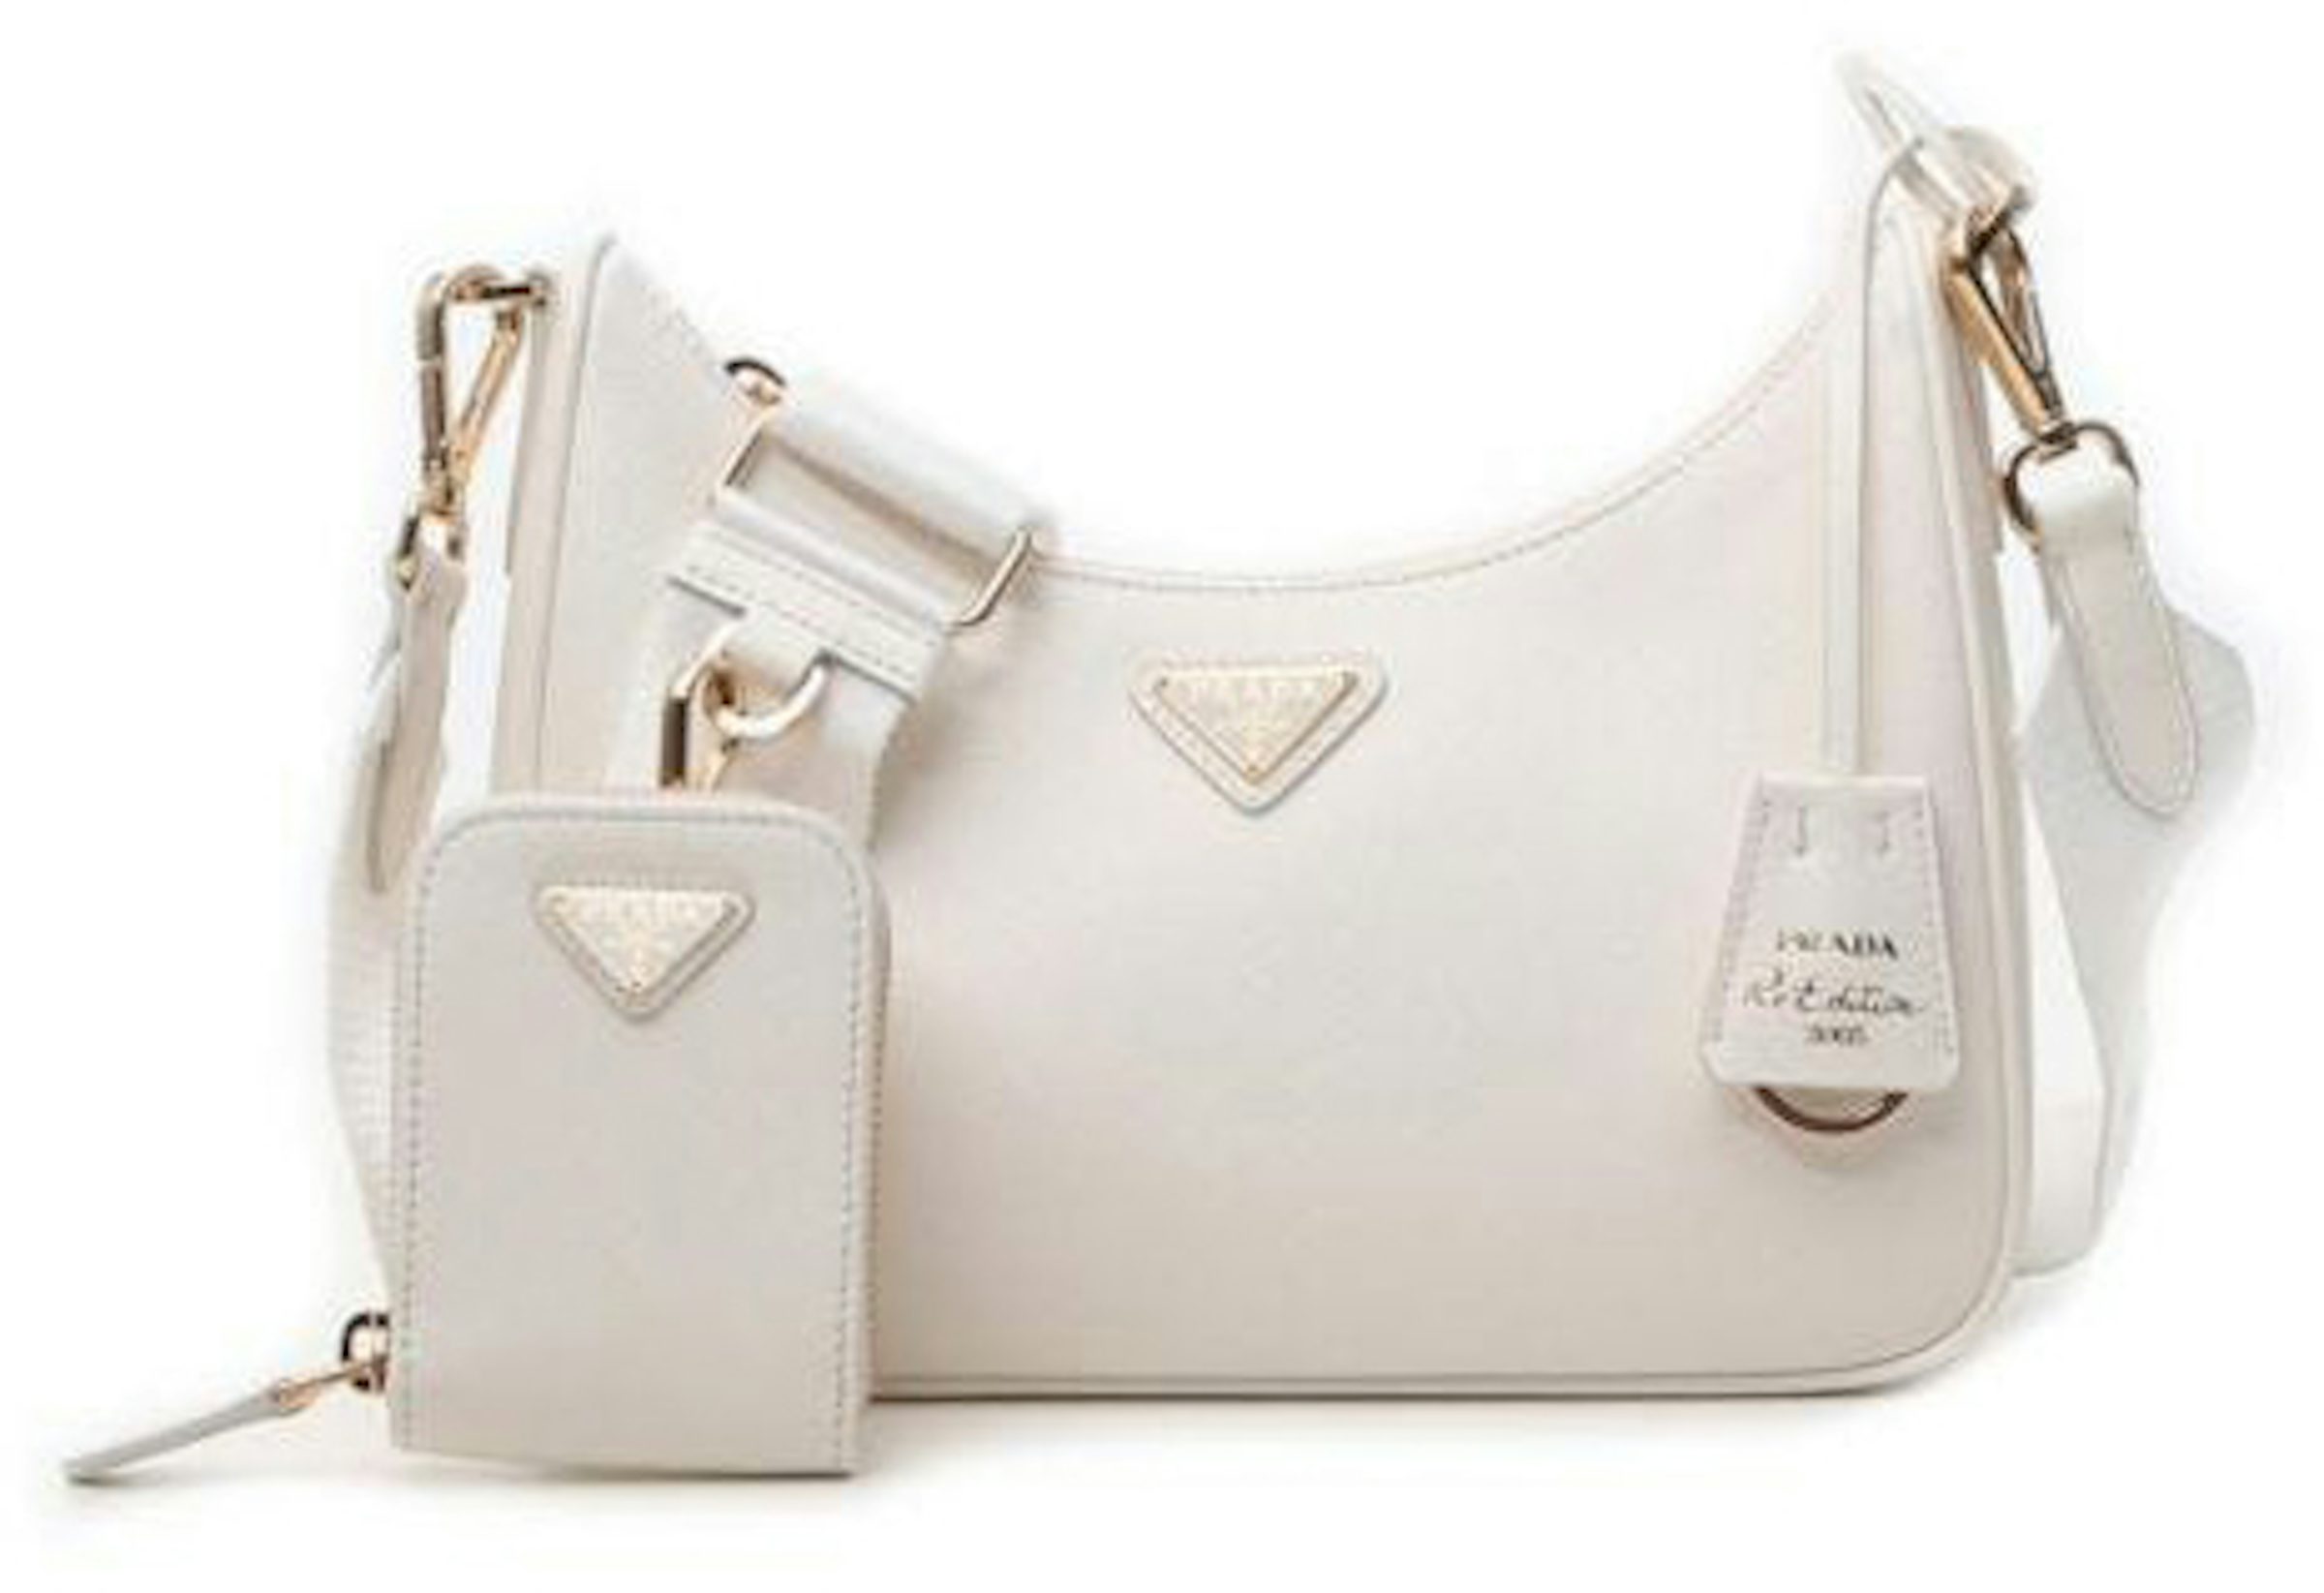 Prada Re-Edition 2005 Saffiano Leather Shoulder Bag White in